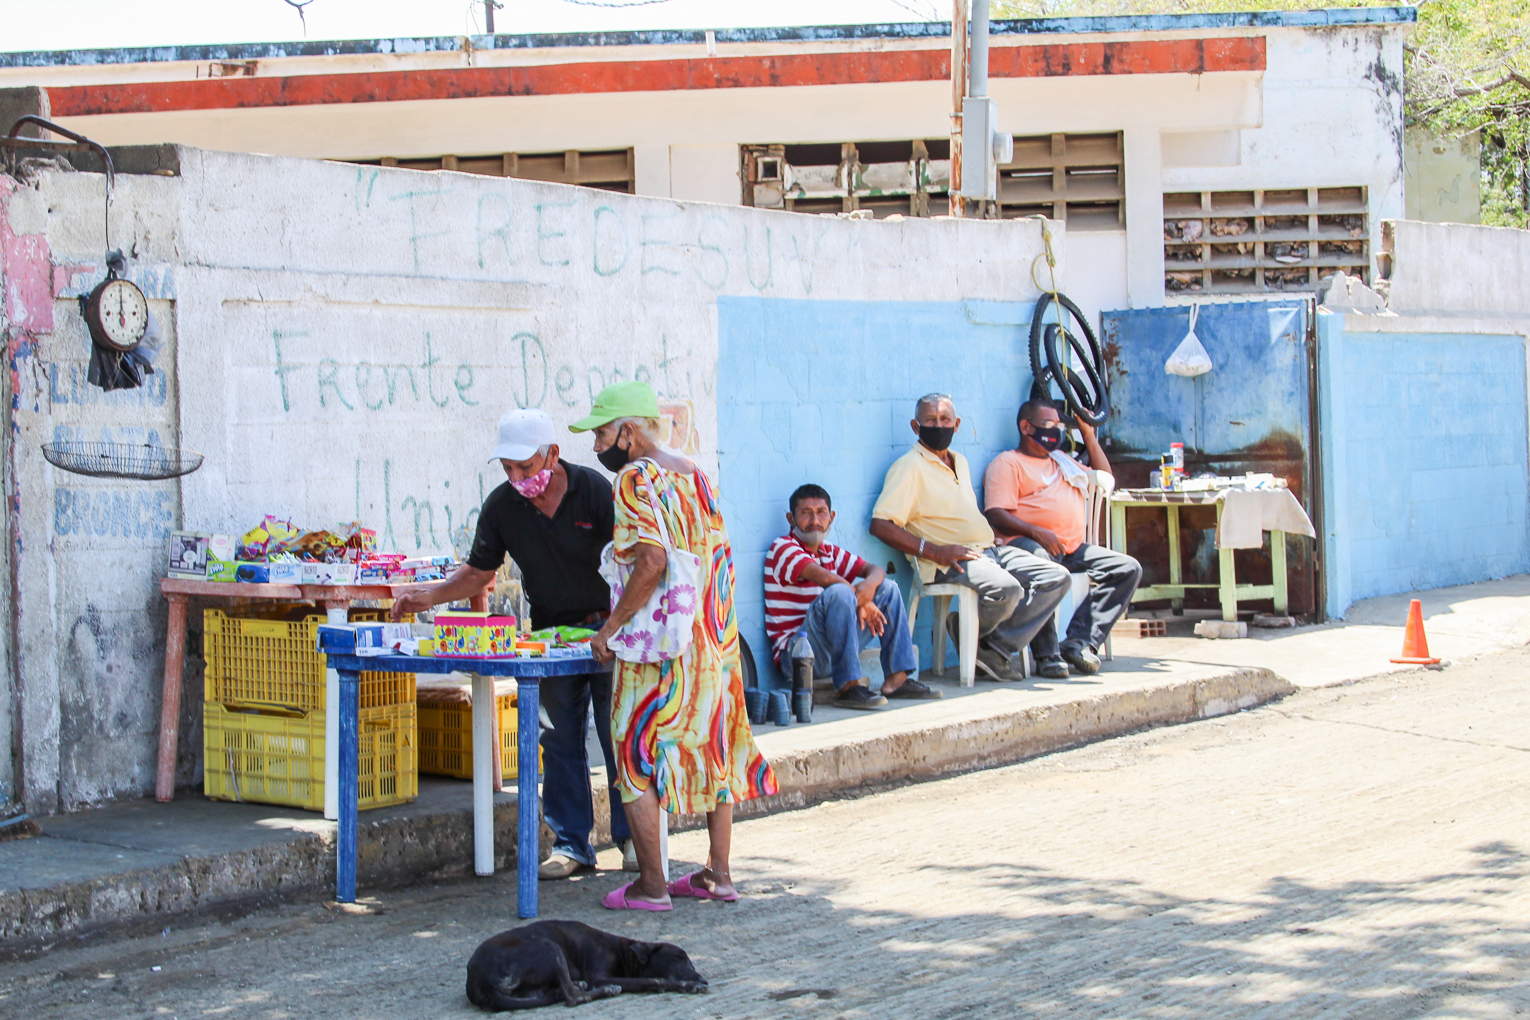 Hogares del occidente venezolano inician diciembre entre hiperinflación e ingresos insuficientes para alimentarse adecuadamente